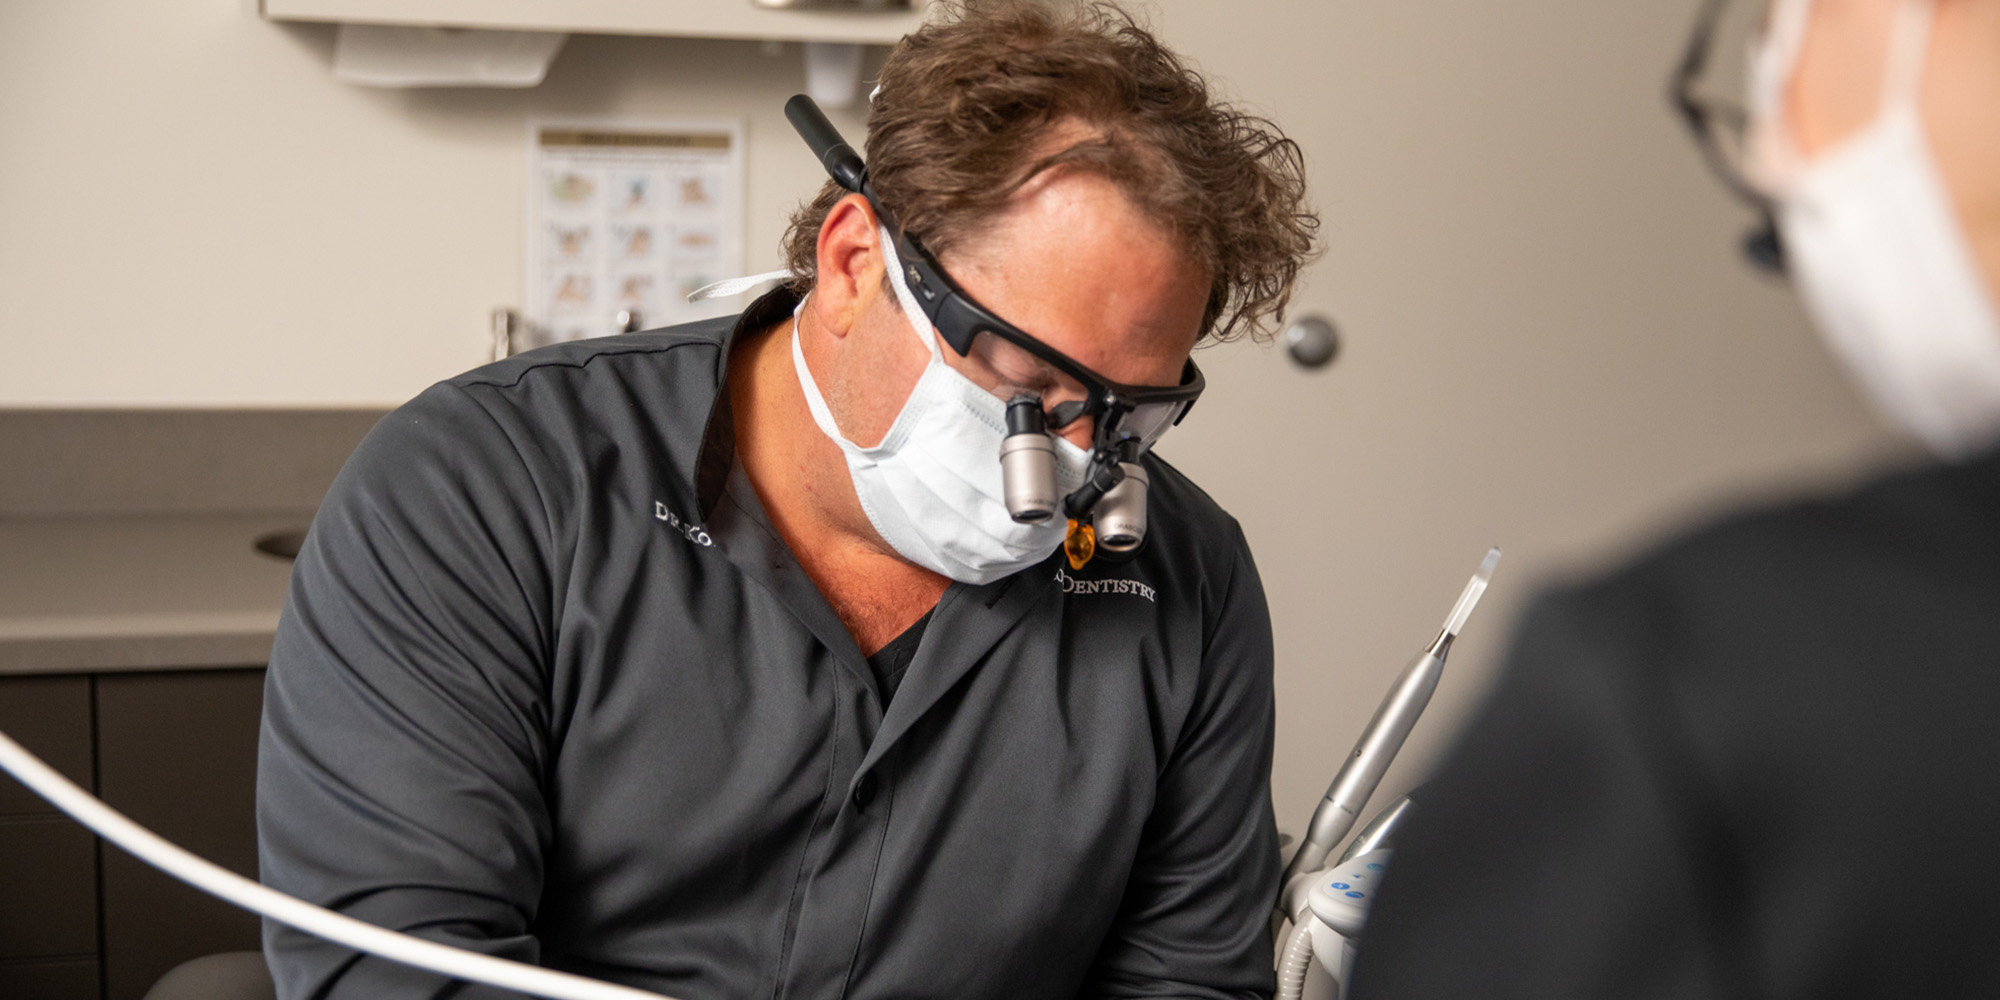 Prosthodontist Dr. Dean Kois in scrubs performing a dental implant procedure.